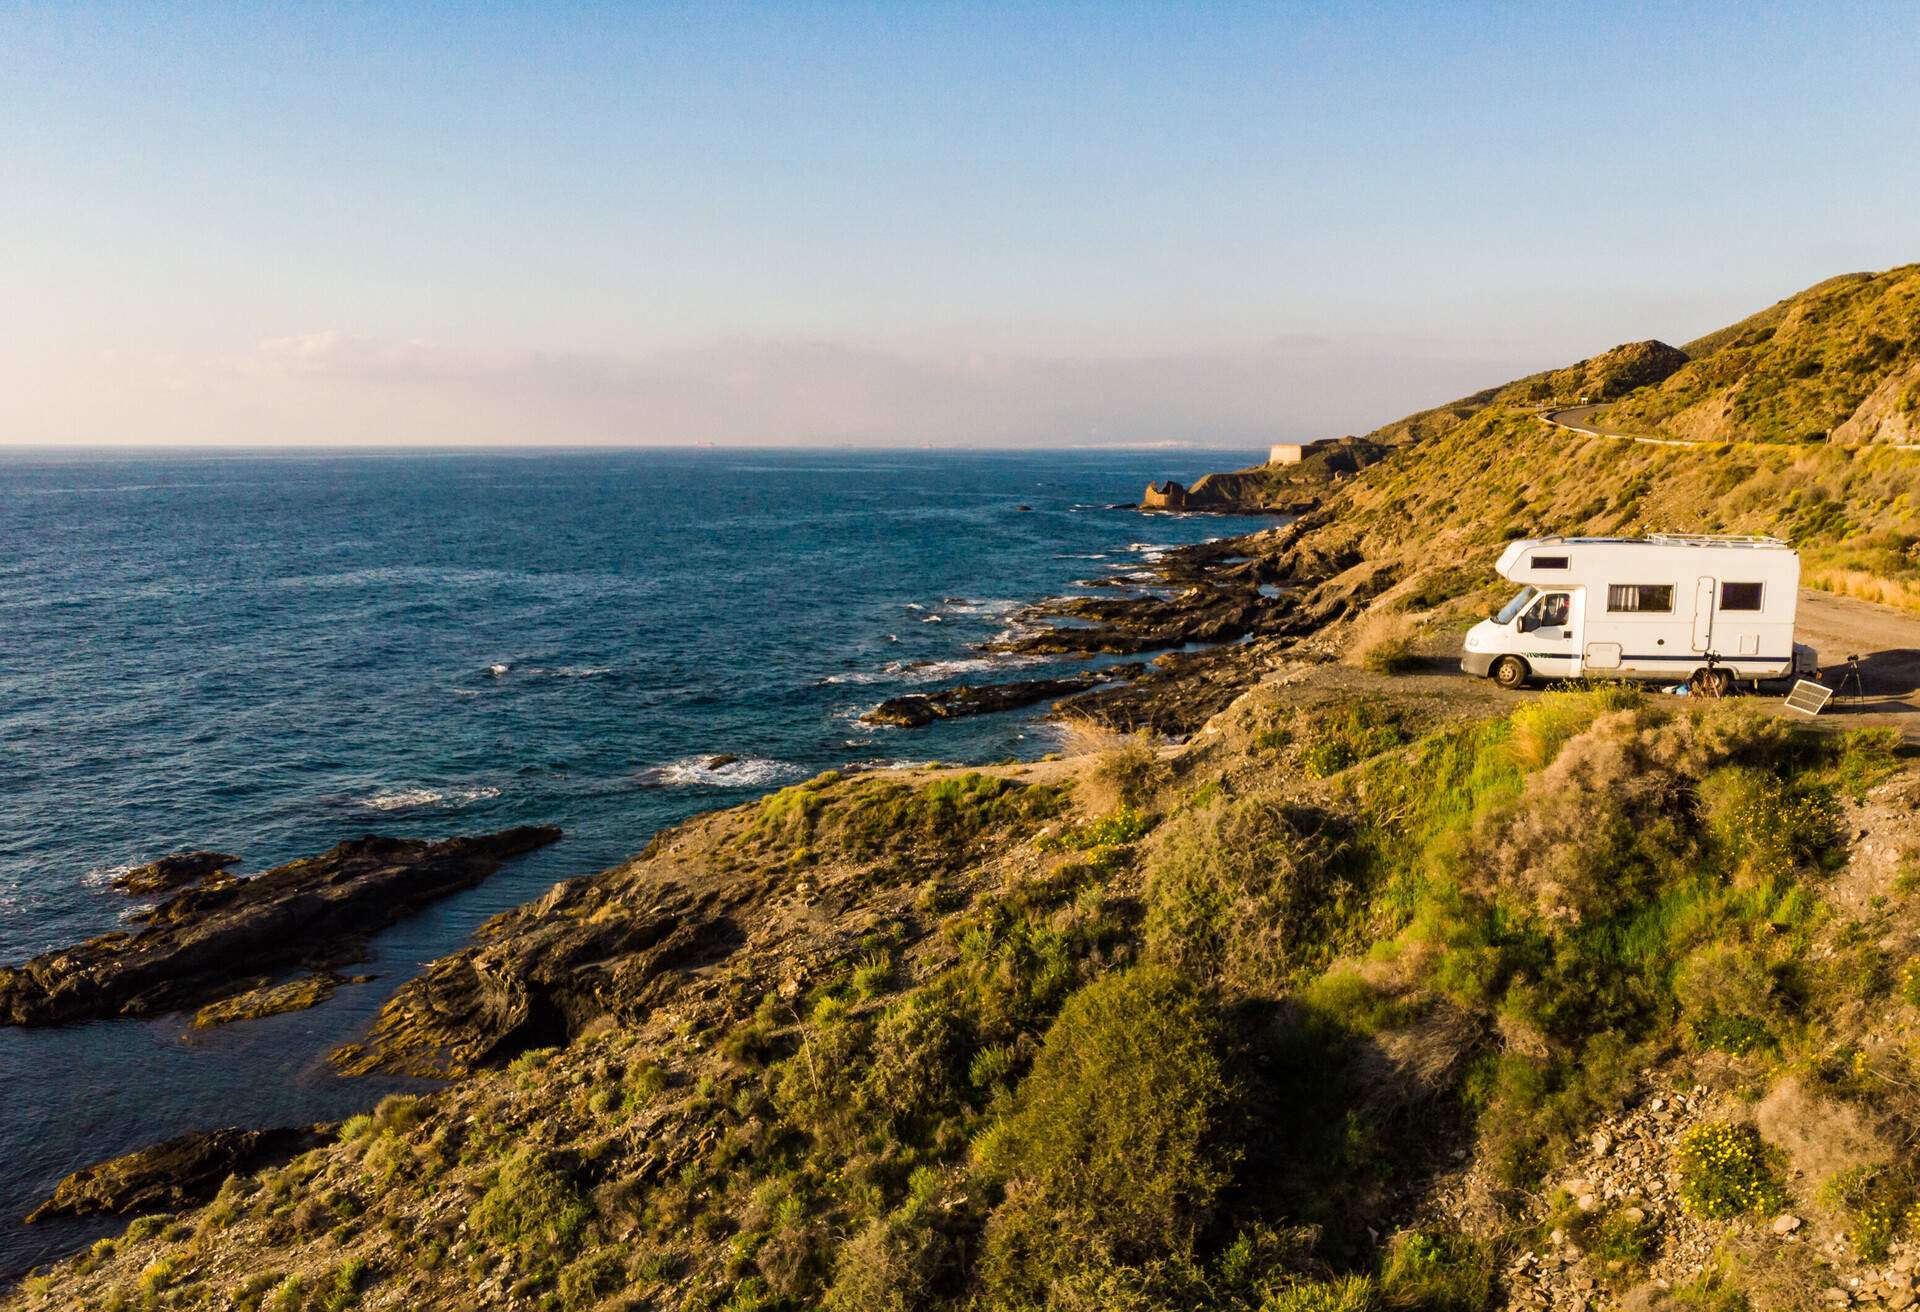 Spanish rocky coastline with camper car camping on cliff sea shore. Mediterranean region of Villaricos, Almeria, eastern Andalusia, Spain. 